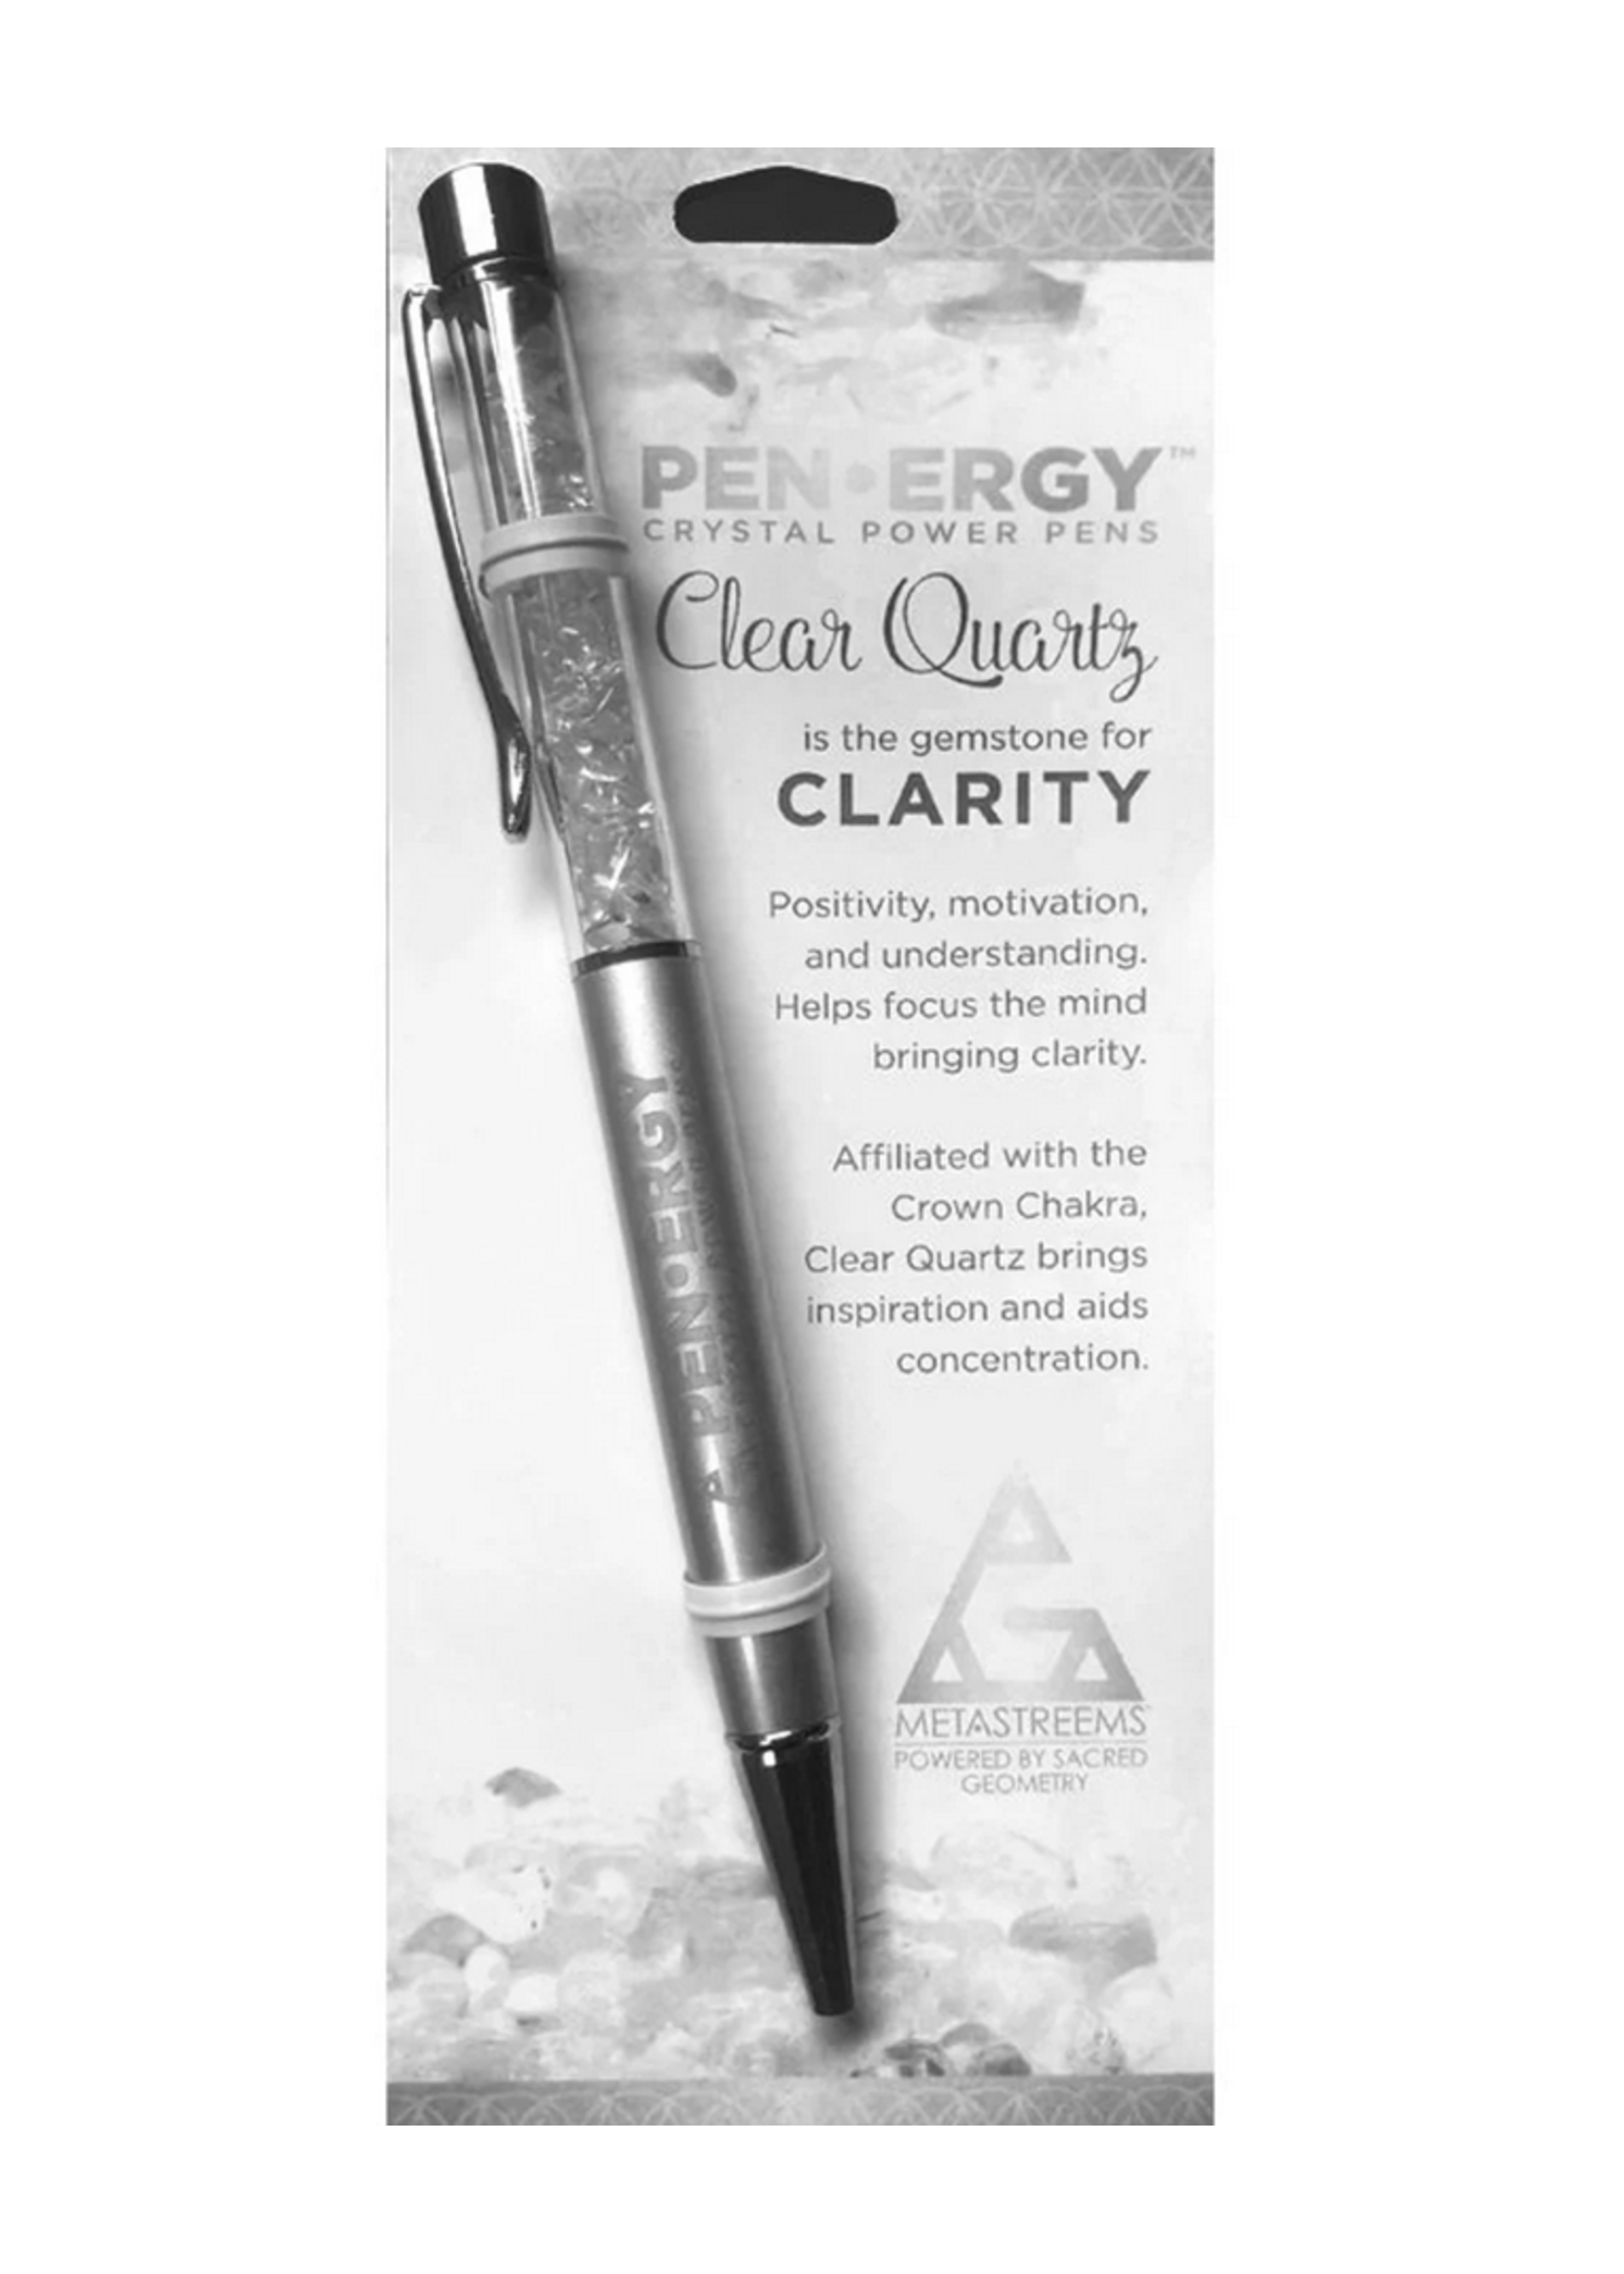 PEN - ERGY Crystal Power Pens Clear Quartz Clarity